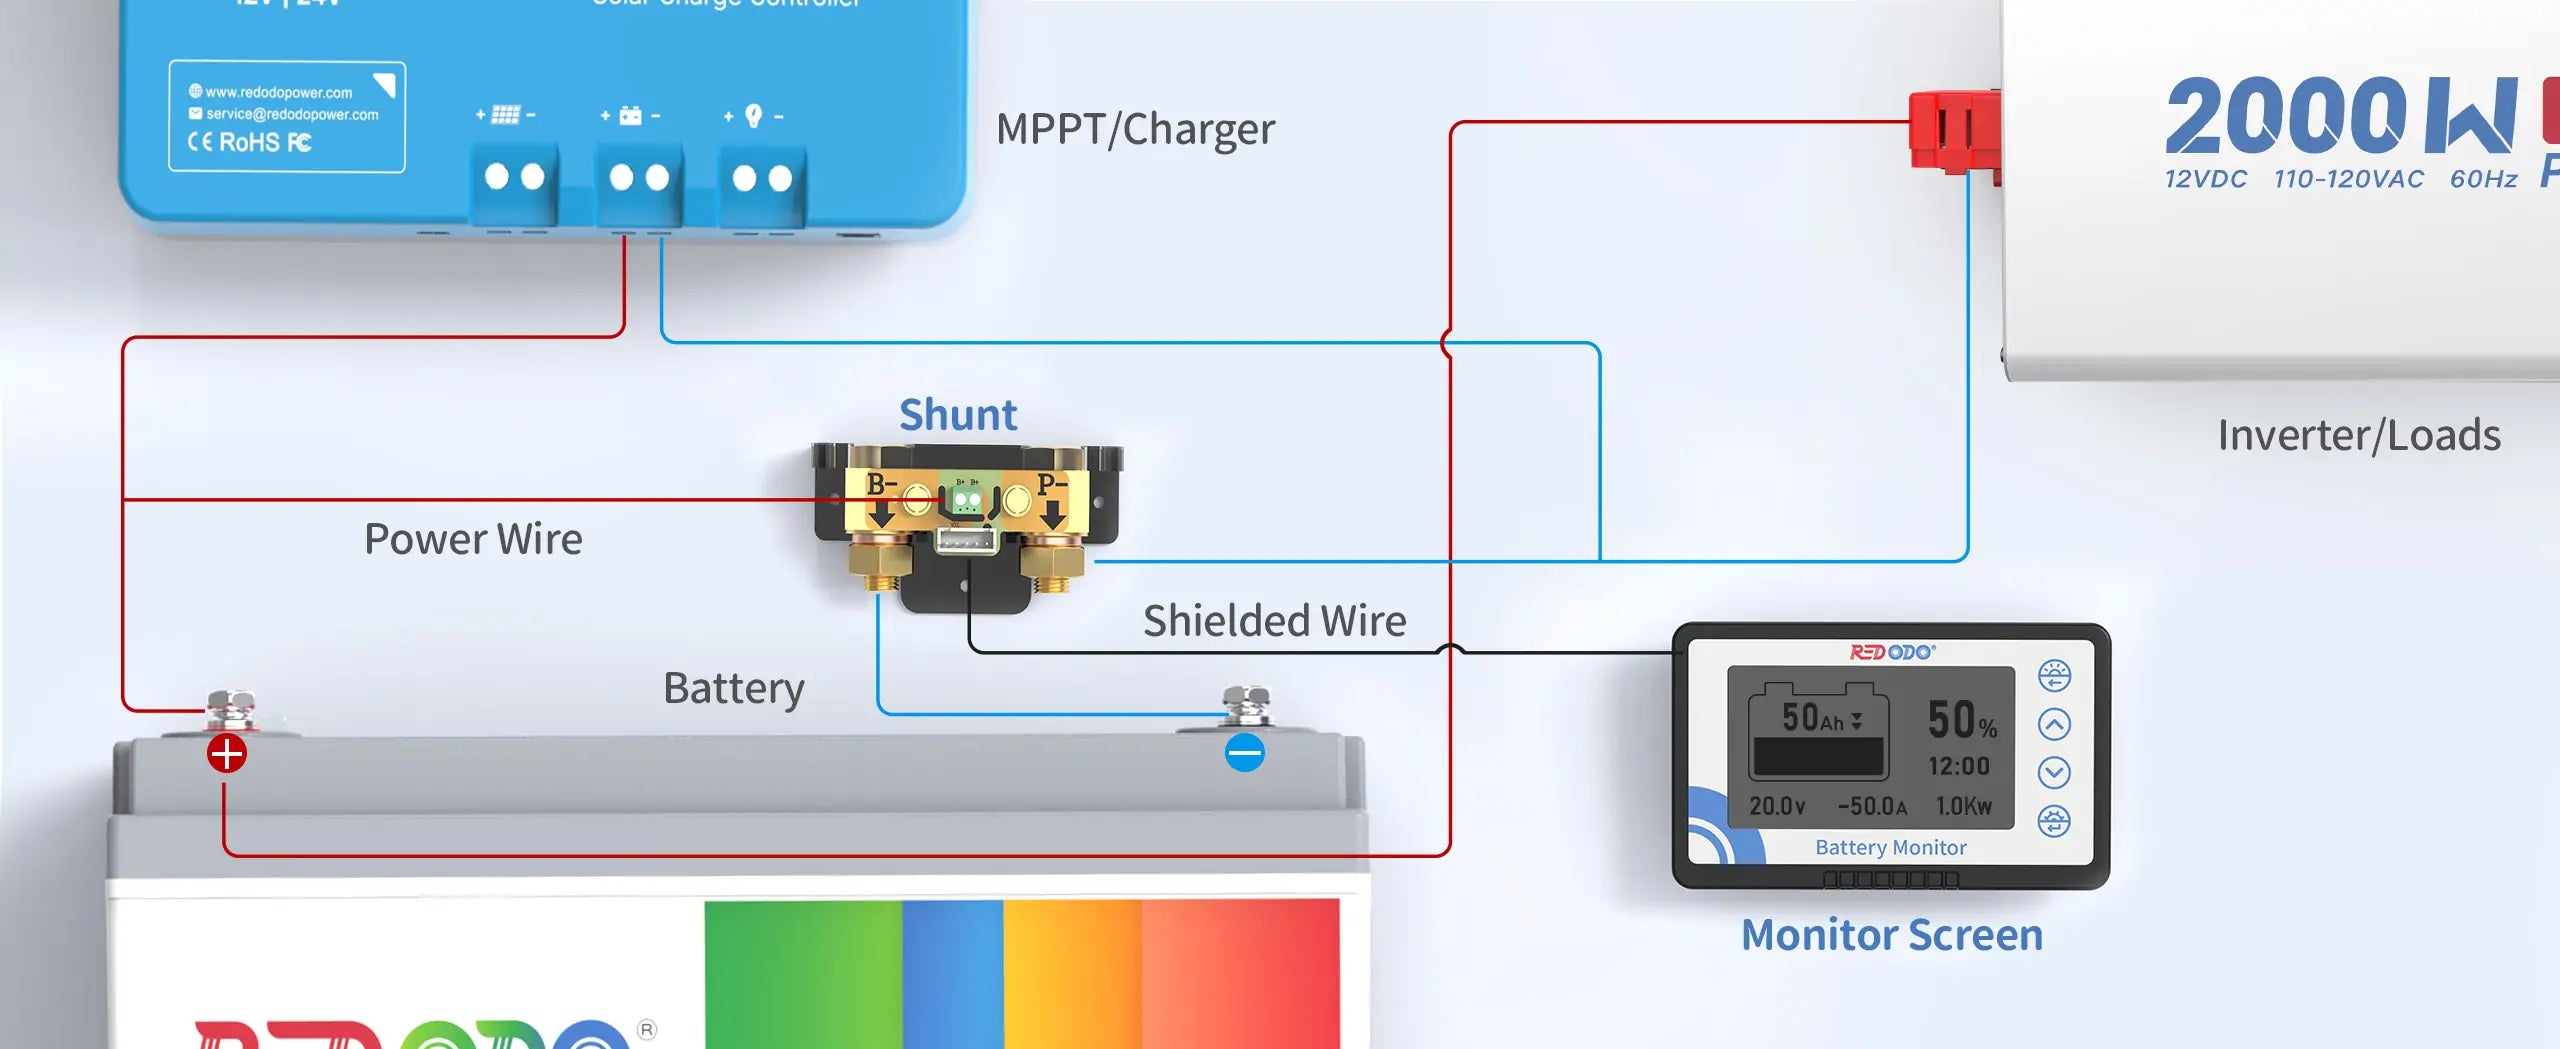 Redodo battery monitor with shunt will alarm